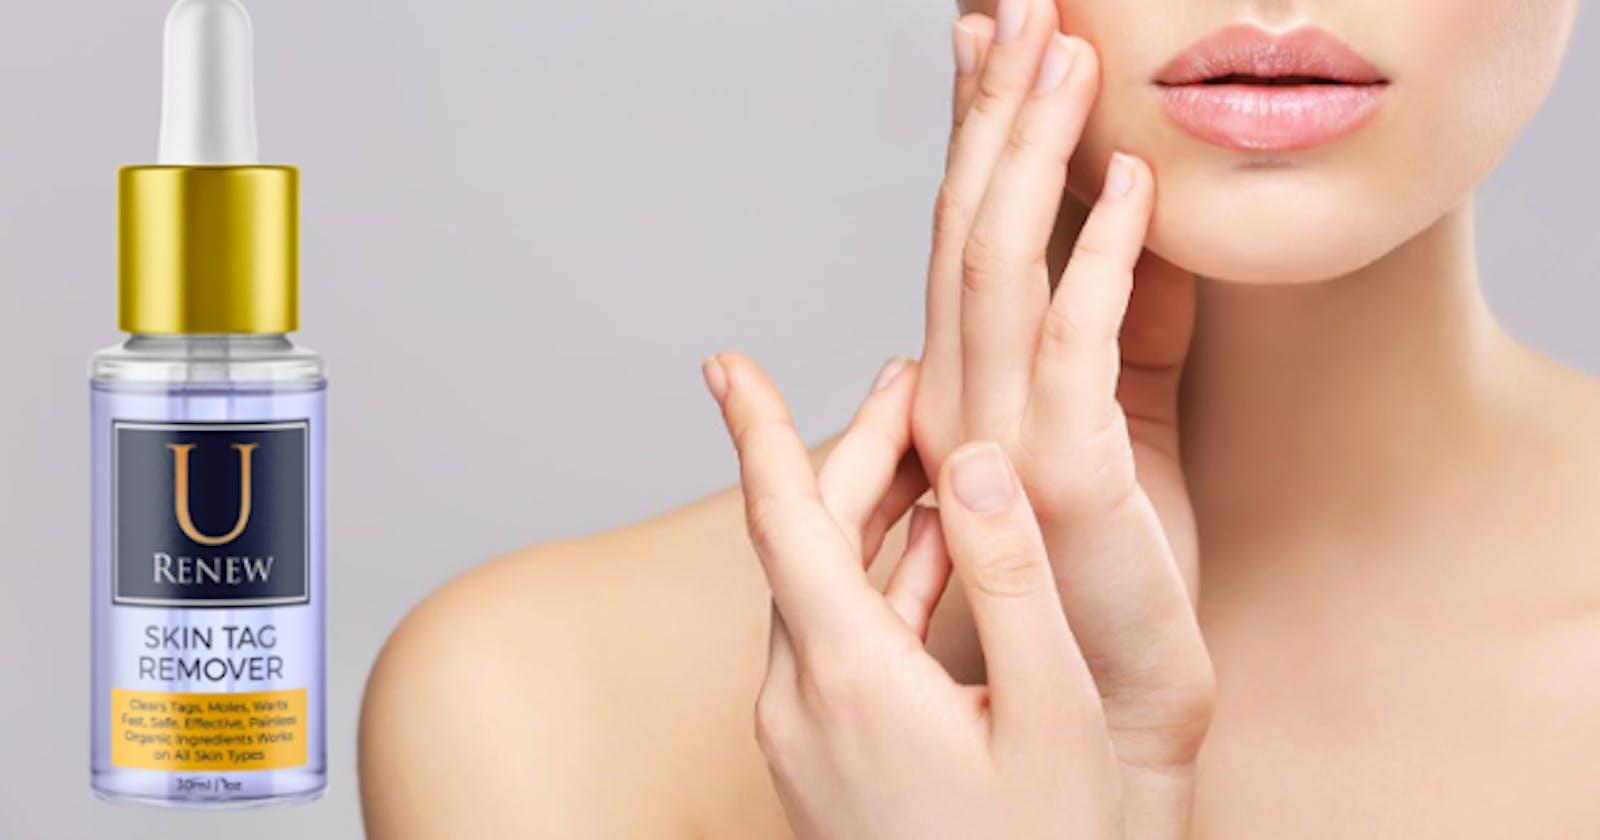 U Renew Skin Tag Remover - (Fake Or Legit) What Real Customer Say? Read Shocking?